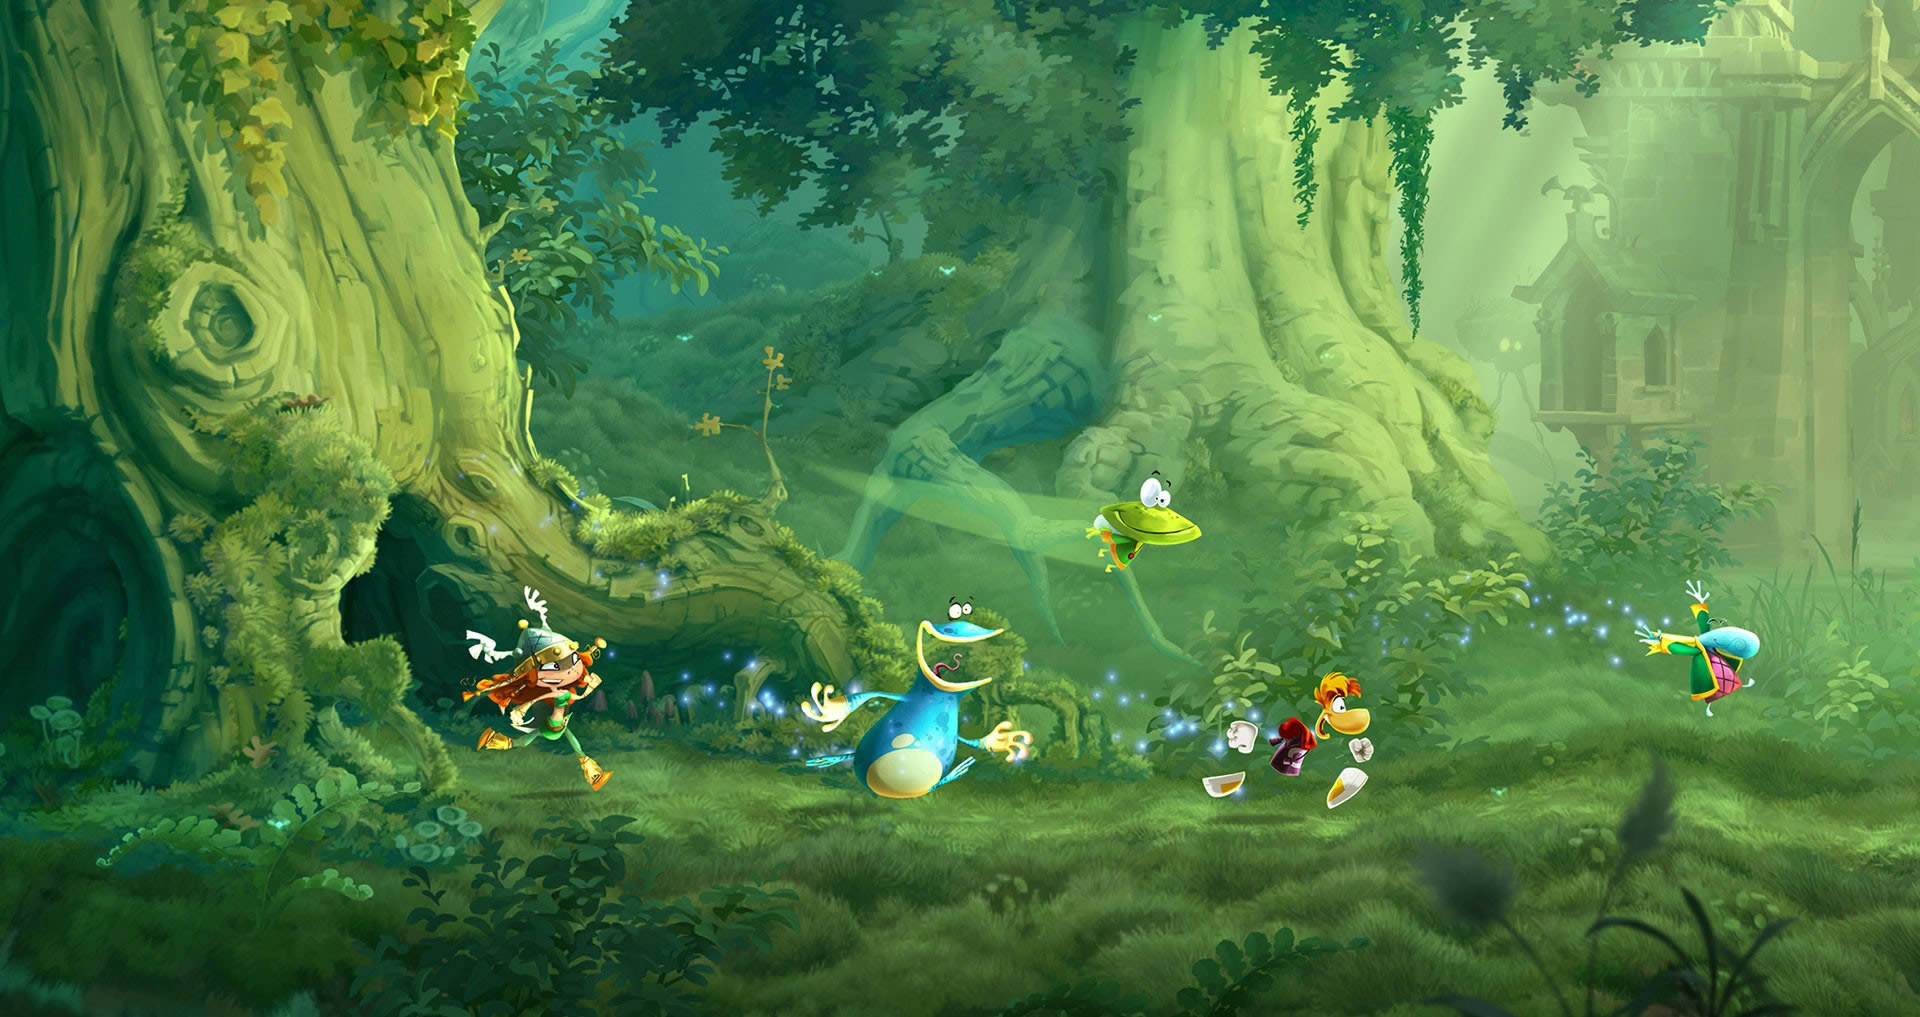 New Rayman Legends Screenshots Hint At 1080p Game